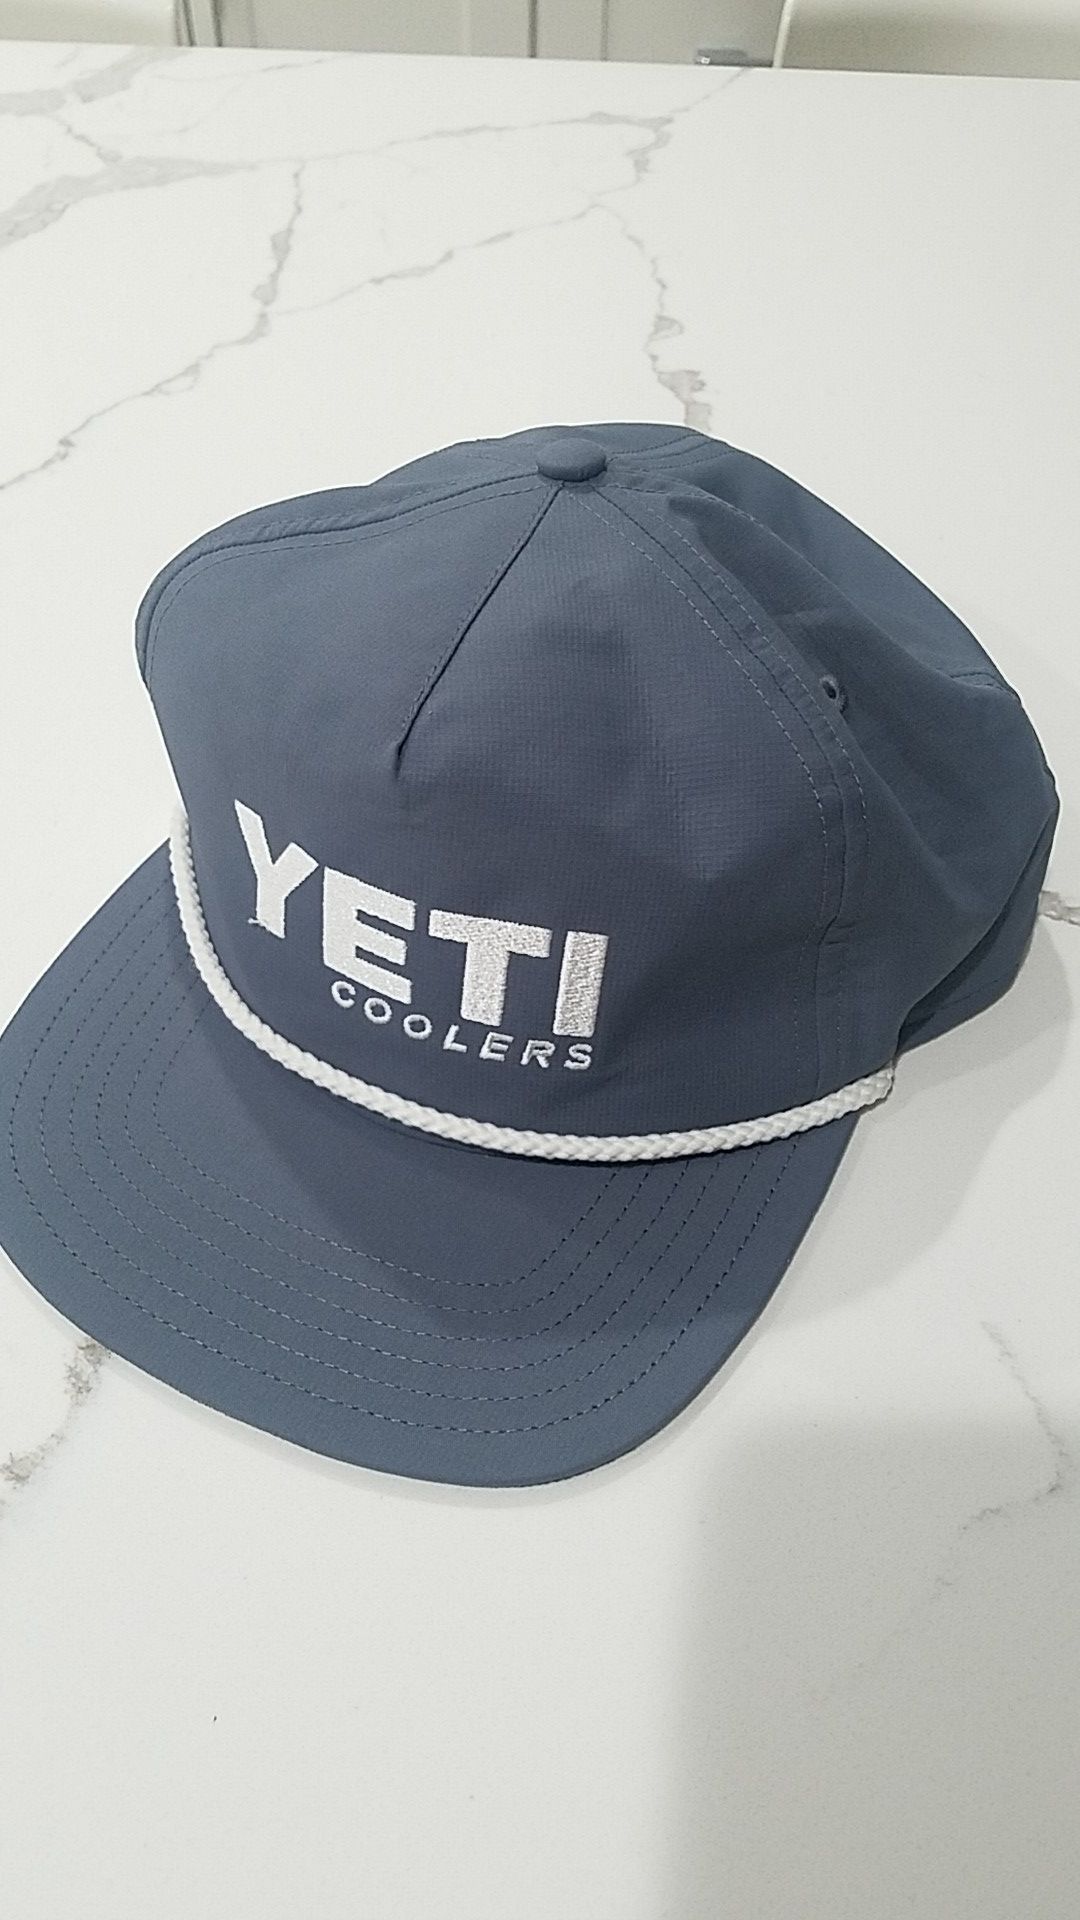 Yeti Coolers SnapBack hat